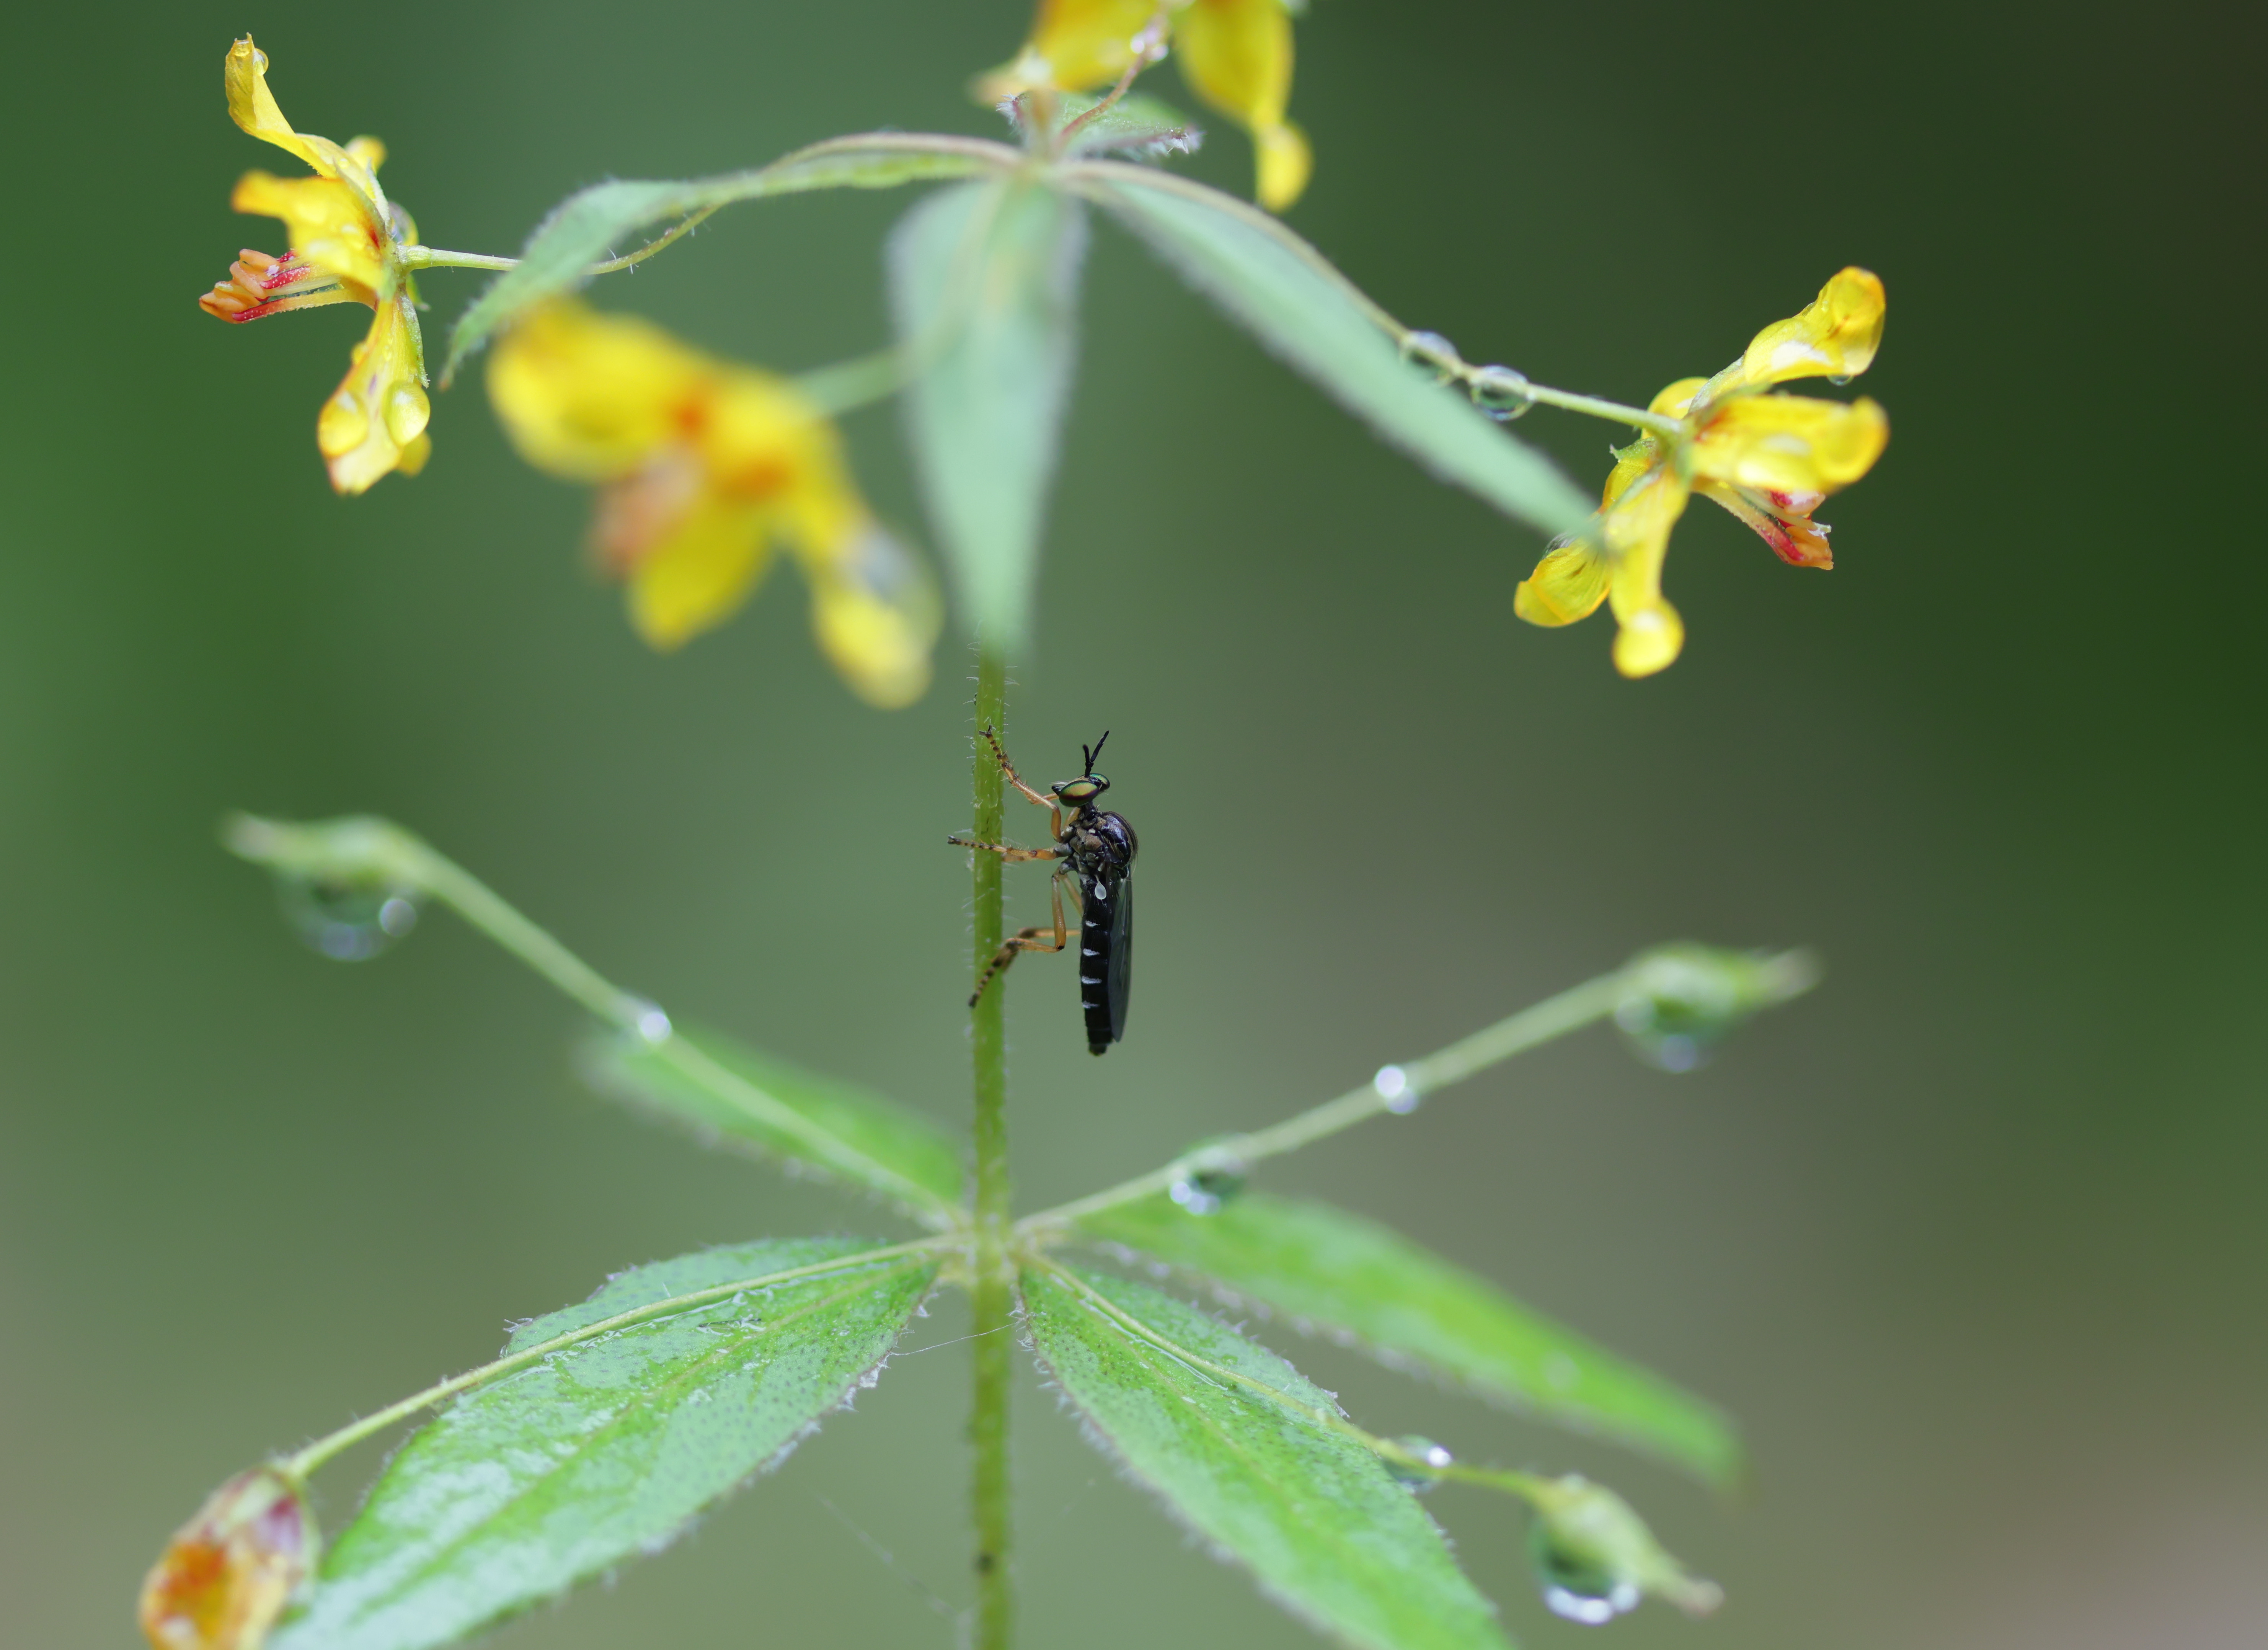 robberfly on stem of yellow flower